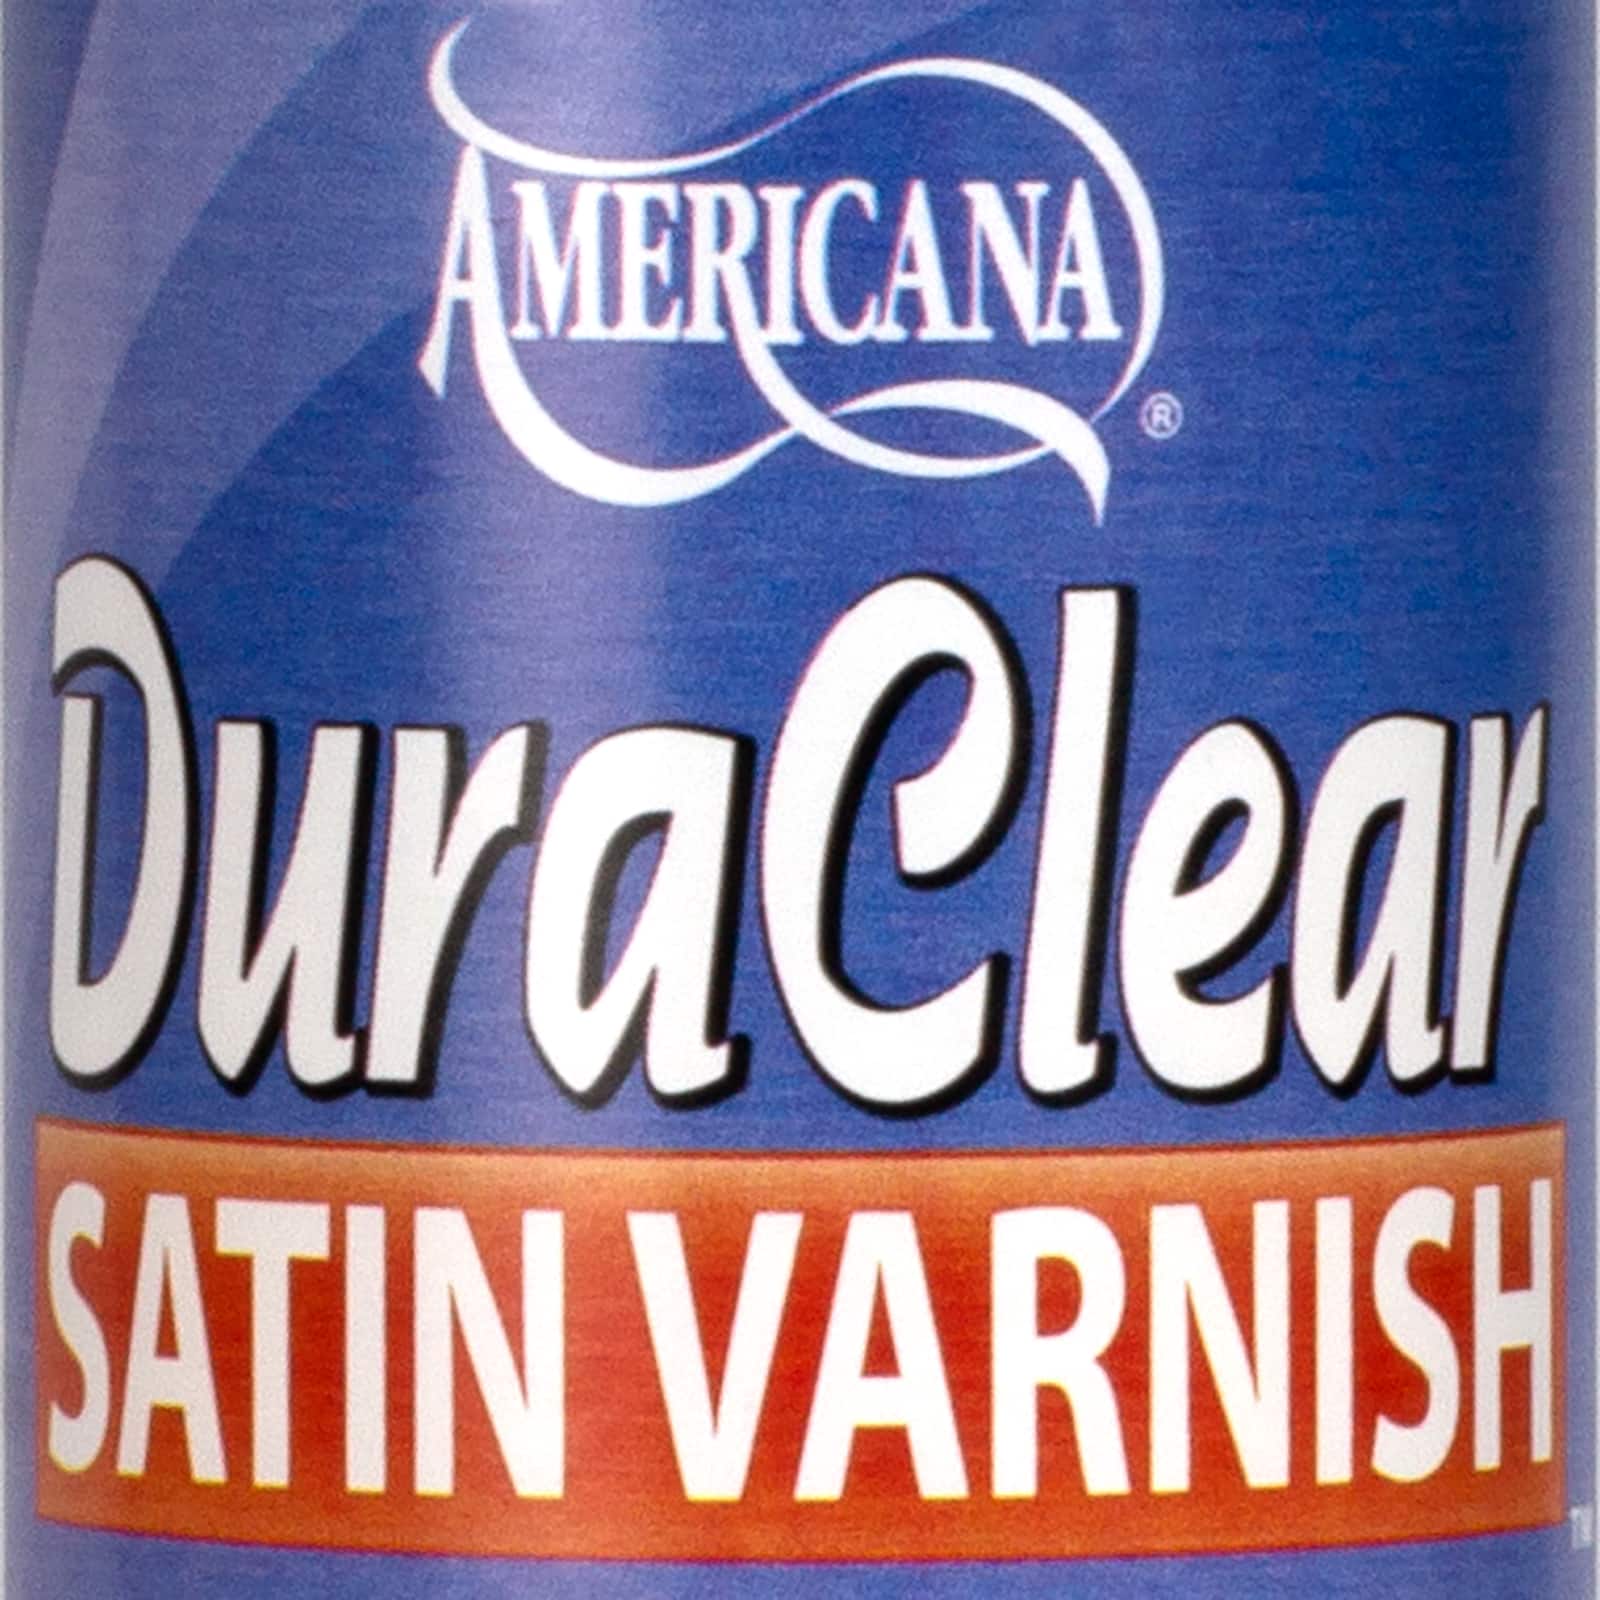 Americana Duraclear Gloss Varnish